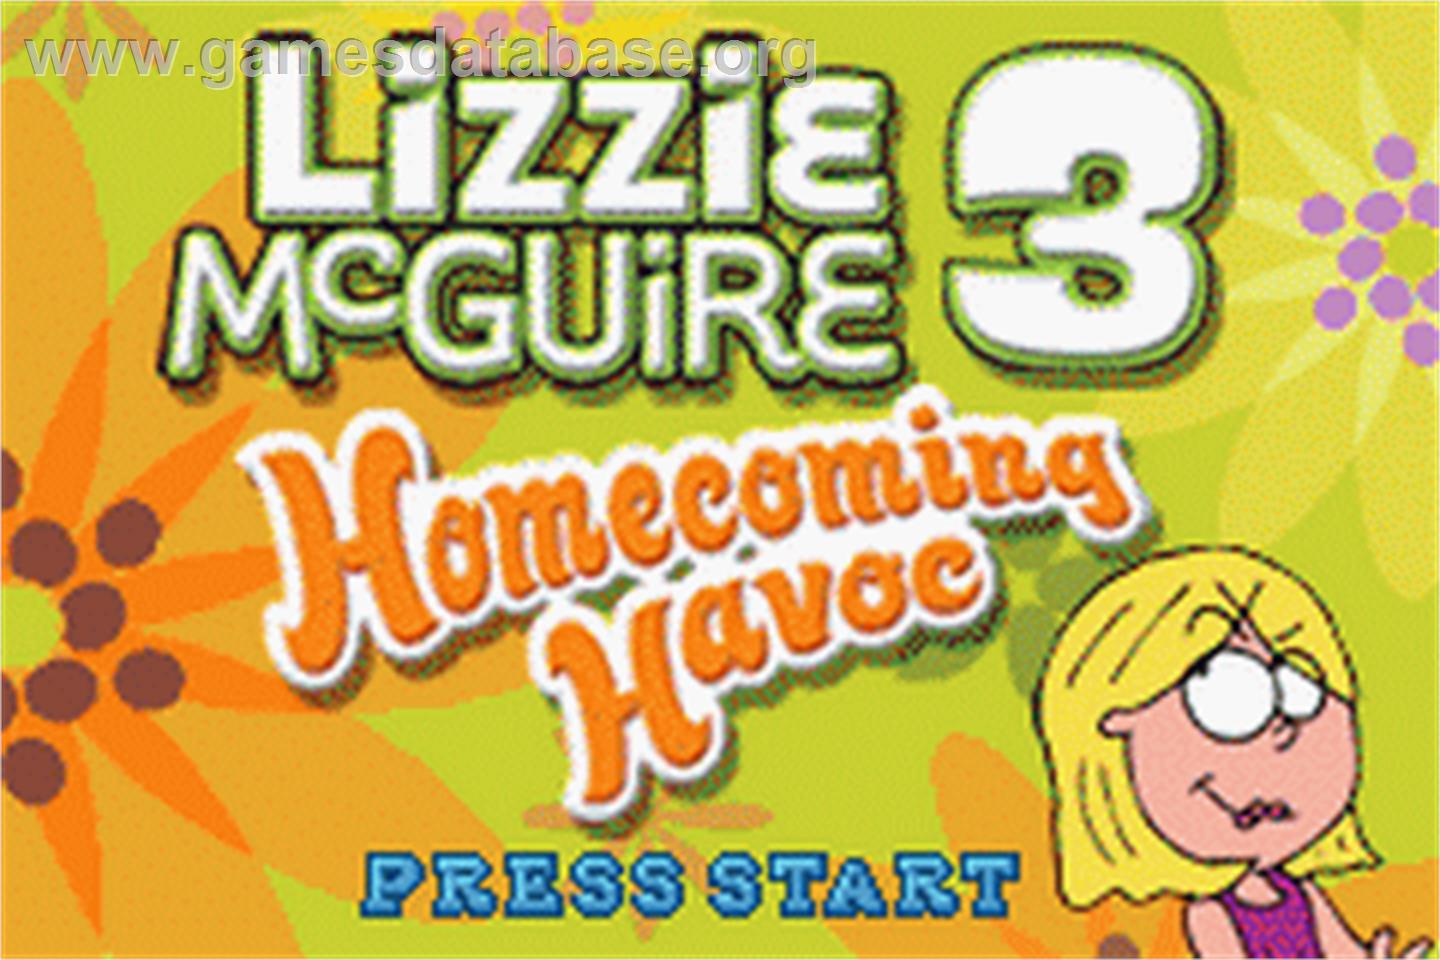 Lizzie McGuire 3: Homecoming Havoc - Nintendo Game Boy Advance - Artwork - Title Screen